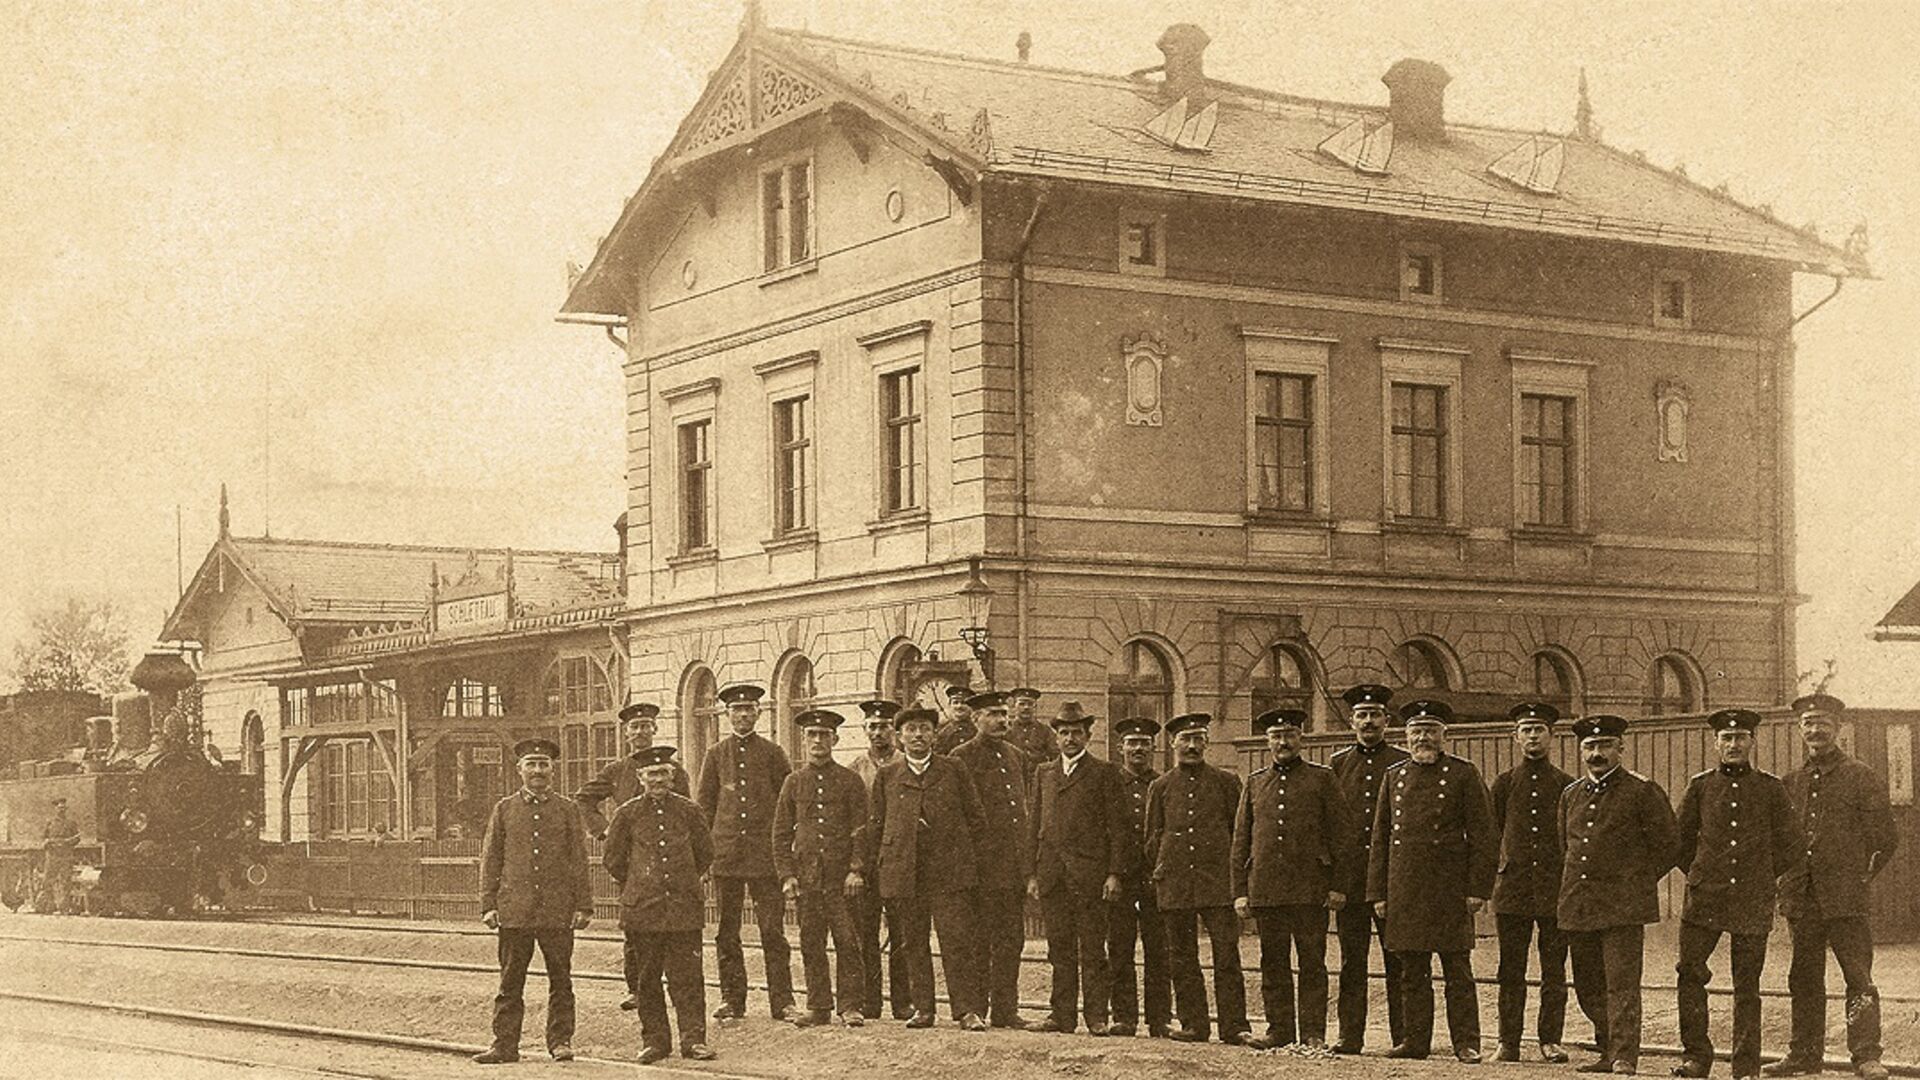 Bahnhof Schlettau im 19. Jahrhundert 
© Slg. Eisenbahnmuseum Bahnhof Schlettau